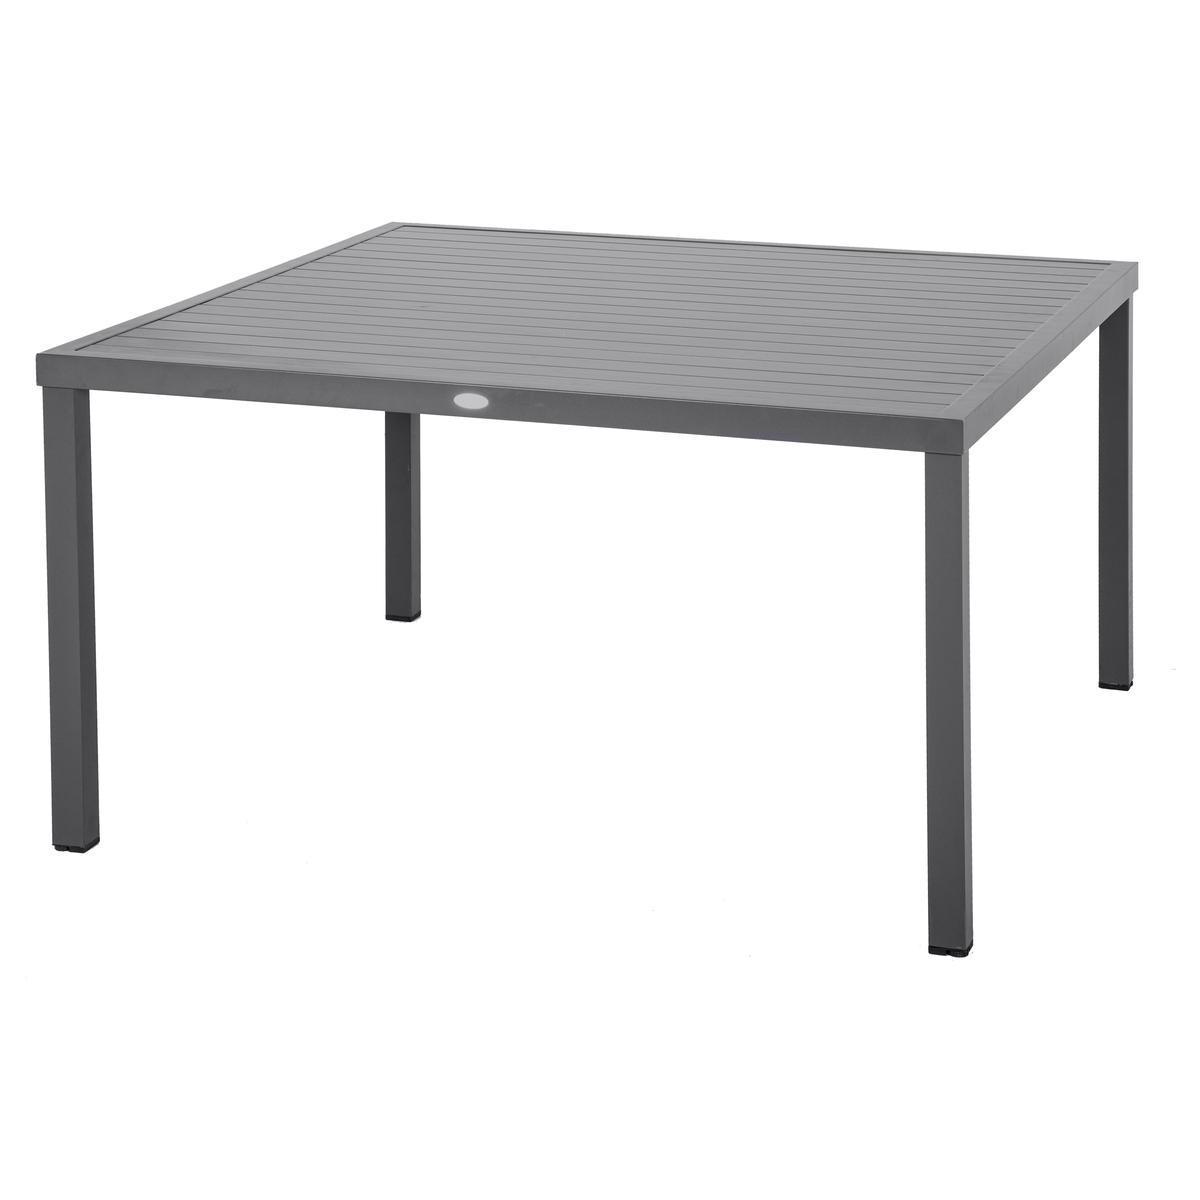 Table Piazza carrée - 136 x 136 cm x H 73 cm - HESPERIDE